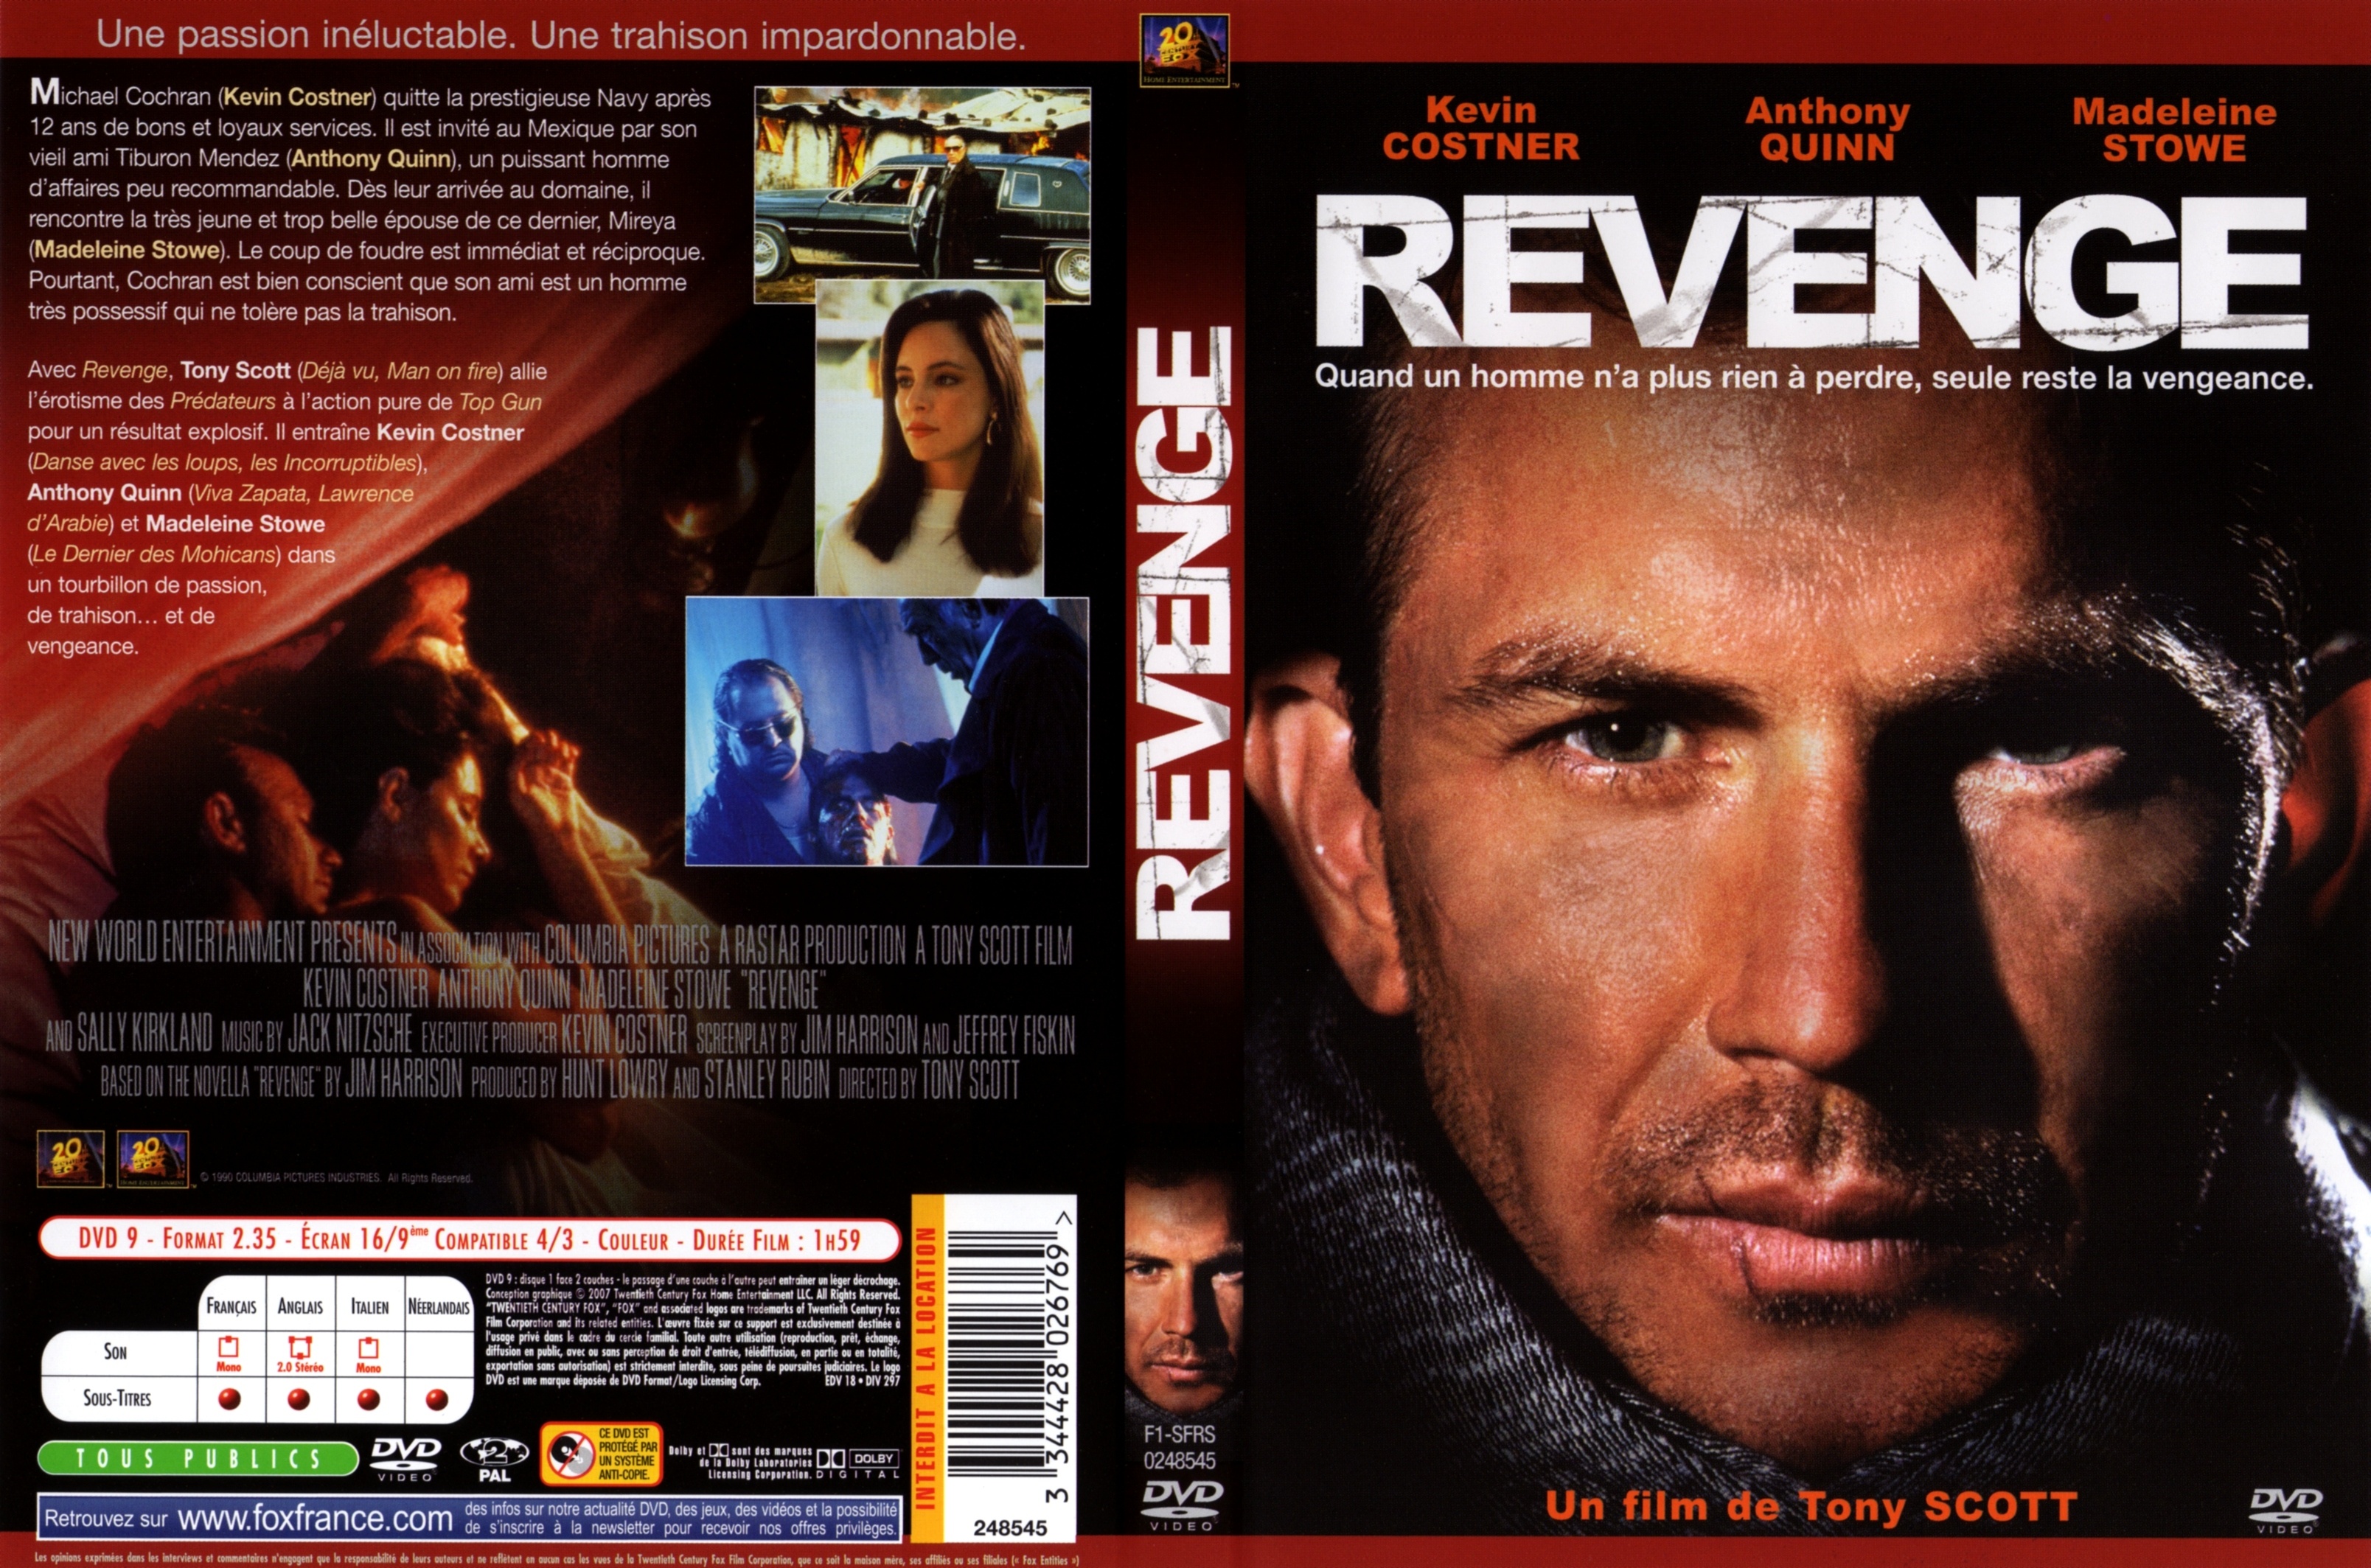 Jaquette DVD Revenge